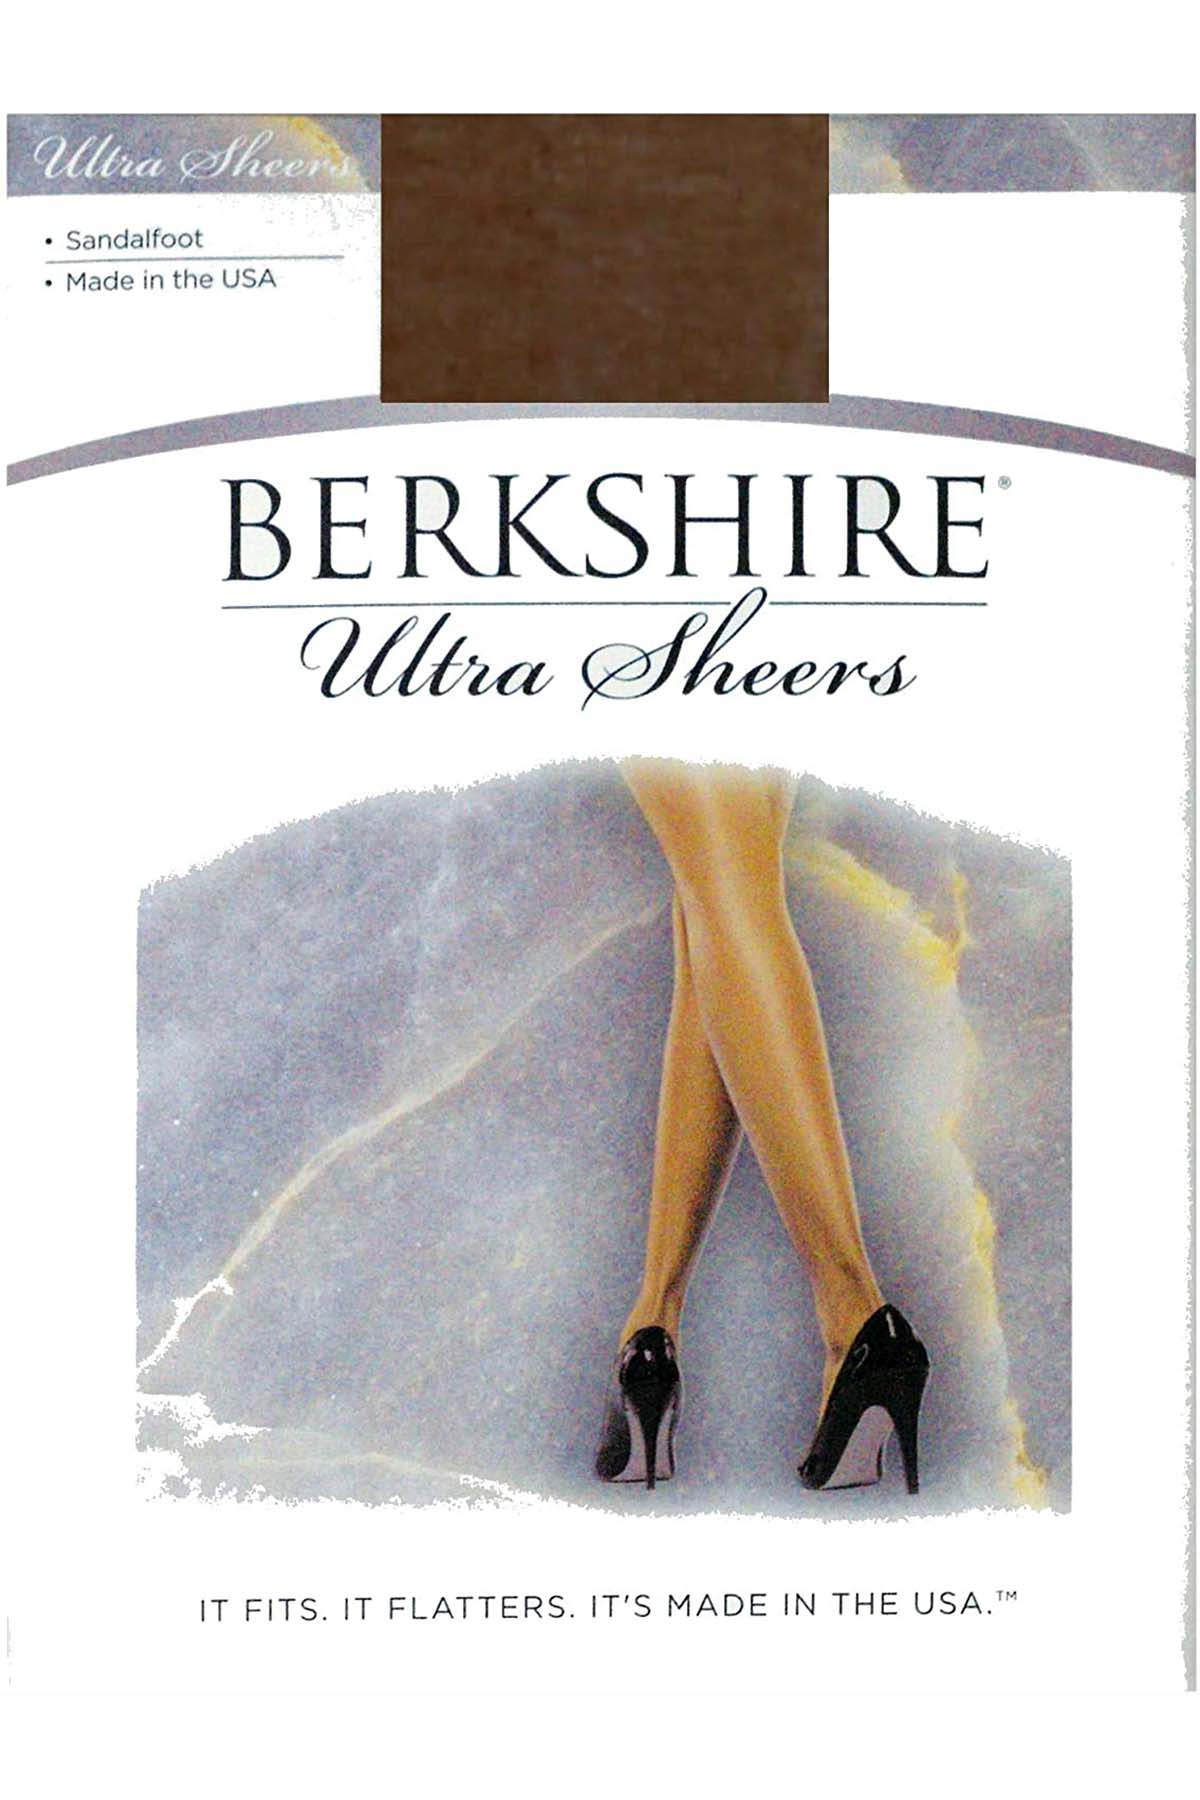 Berkshire Ultra Sheers Sandalfoot Pantyhose in Utopia